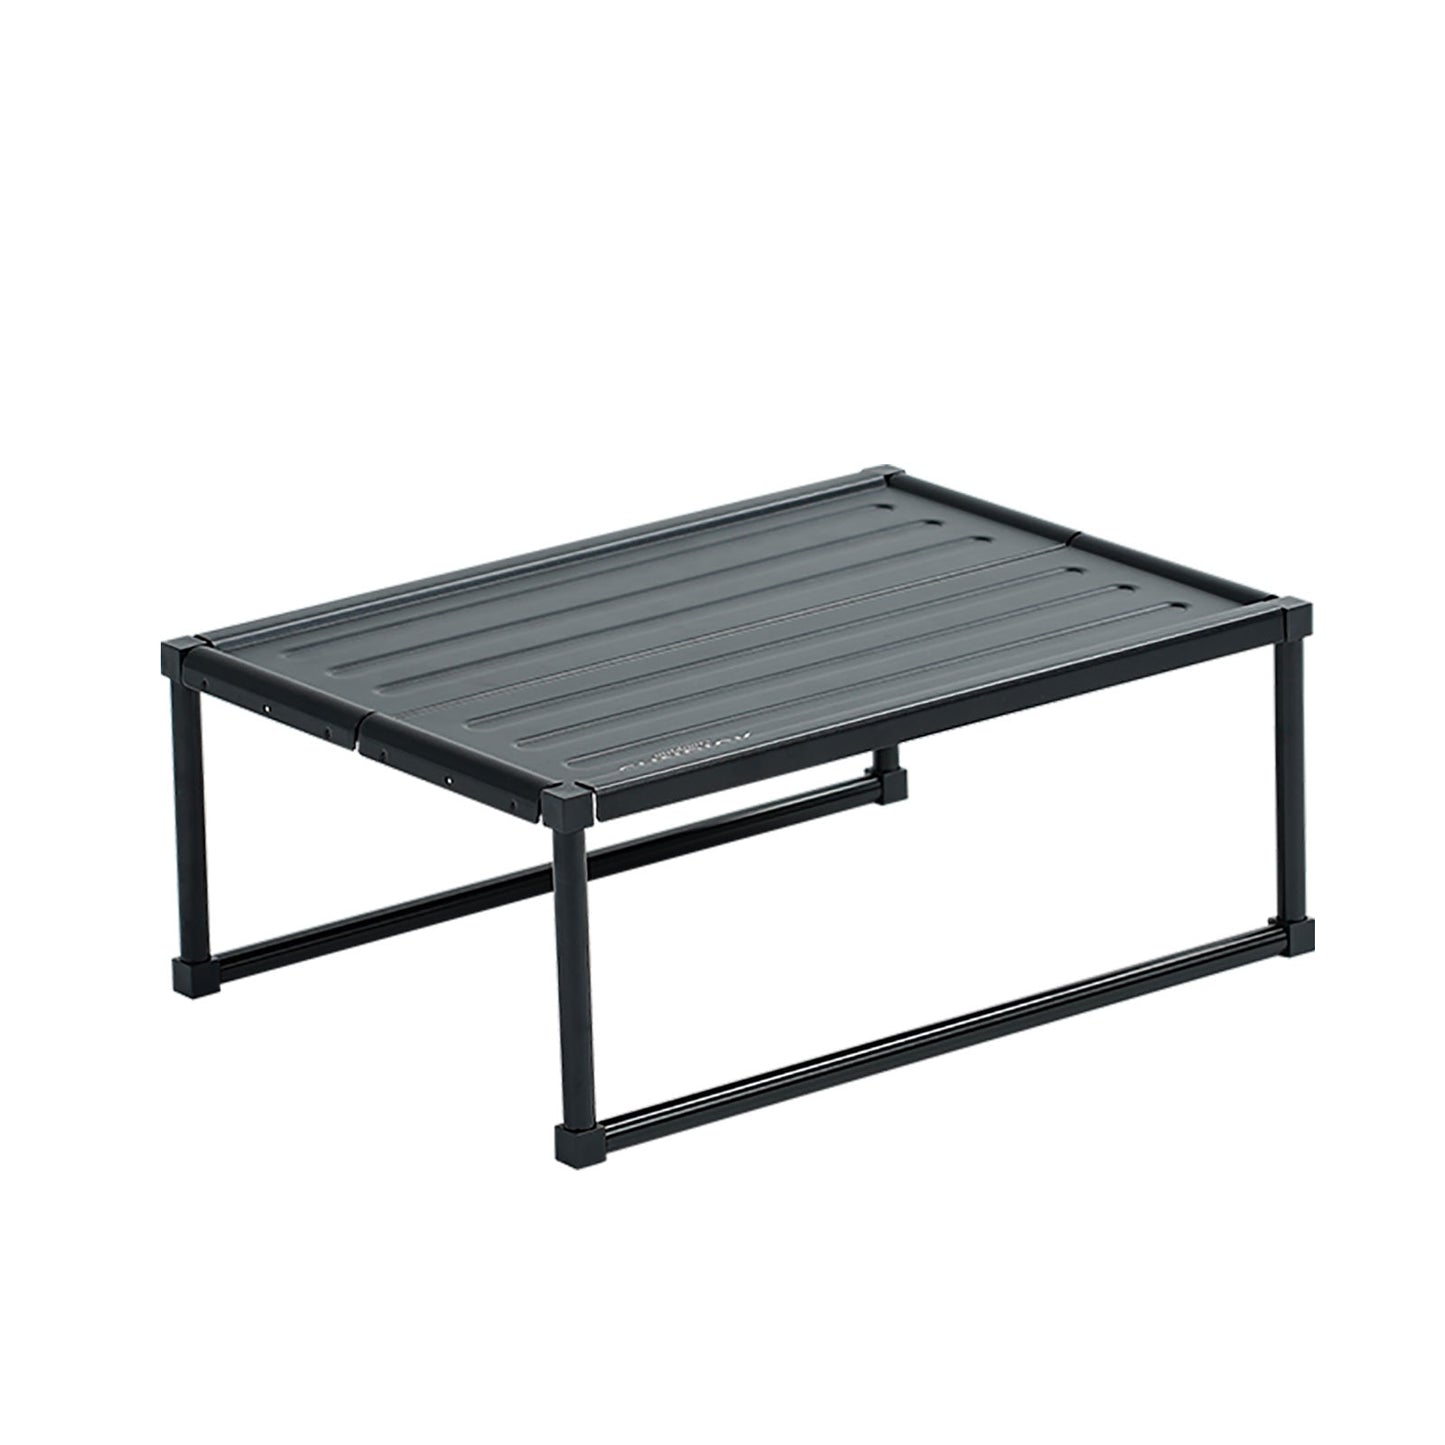 Portable Outdoor Folding Table Ultralight Aluminum Alloy Camping Table Outdoor Furniture Garden Picnic BBQ Desk